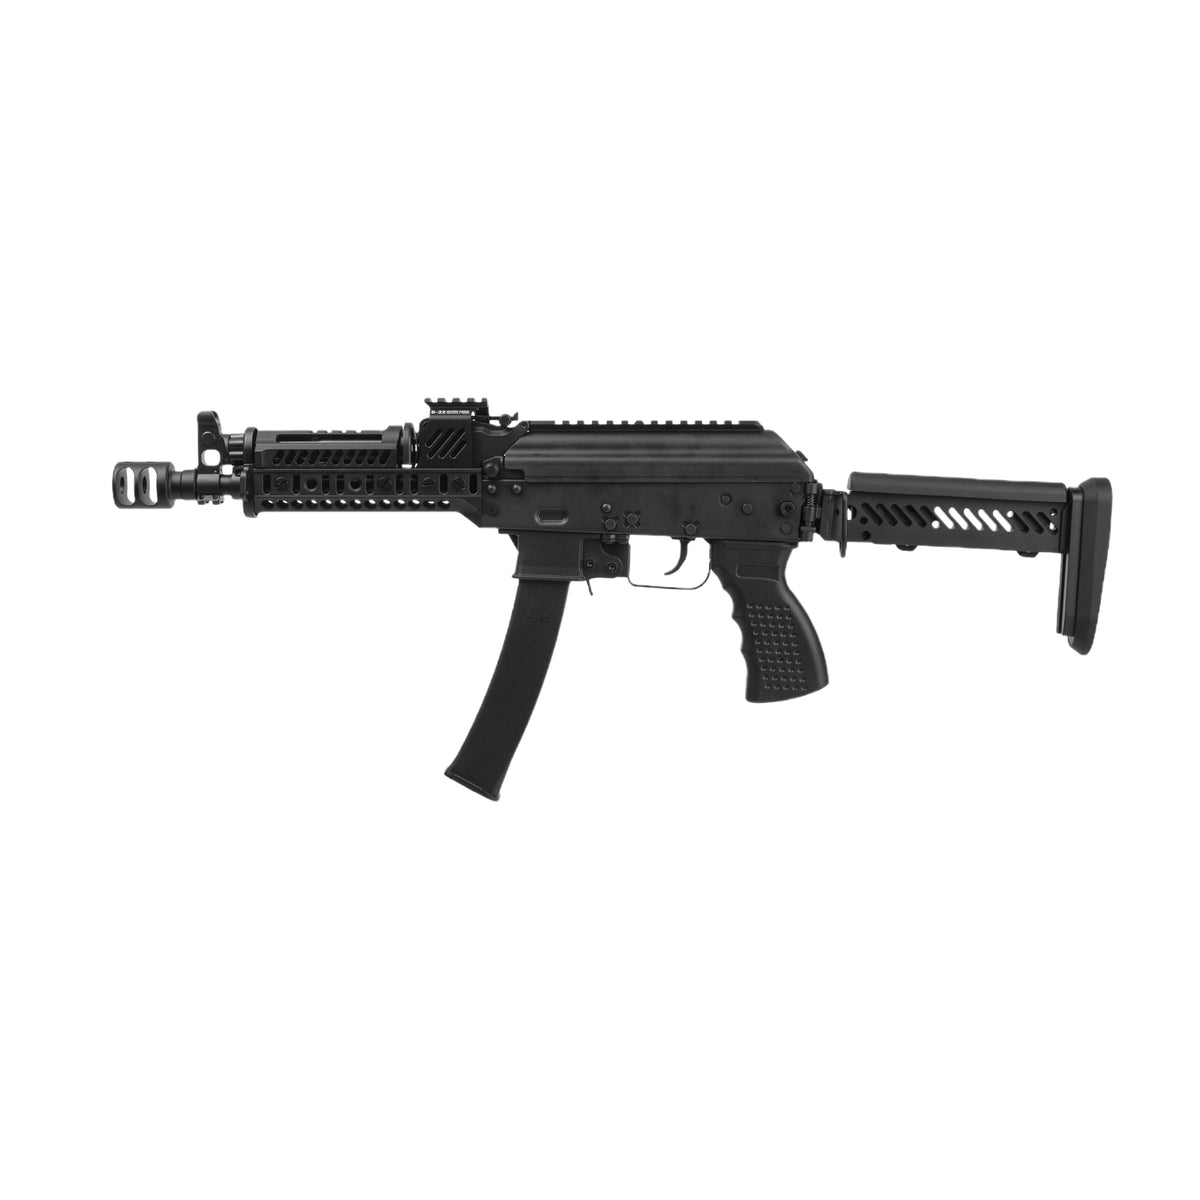 ARCTURUS PP19-01 Vityaz Ztac SP1 PE MOSFET ENHANCED AEG (CQB / Carbine)